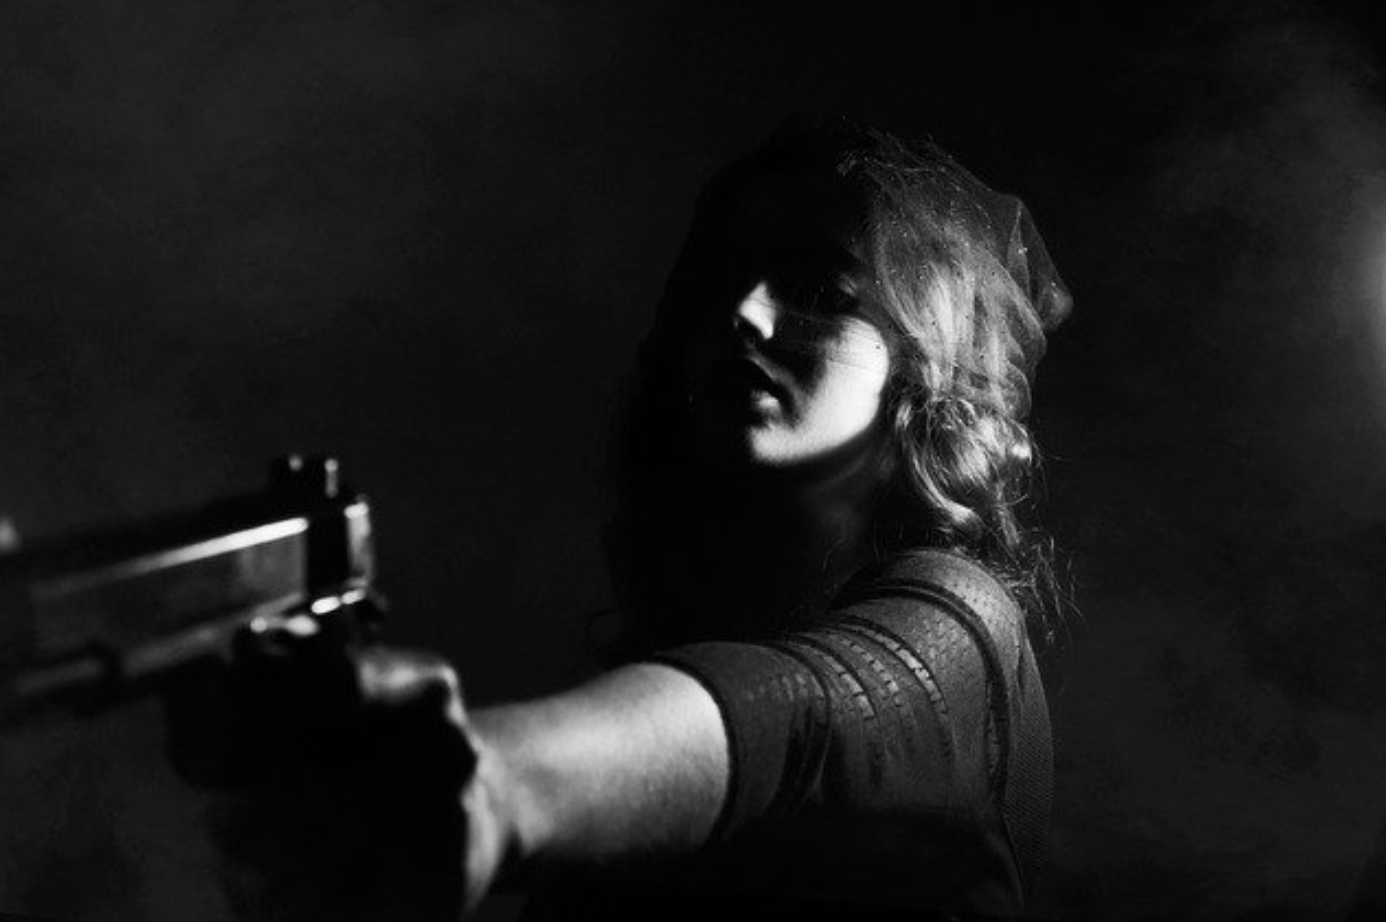 Woman aiming gun; image by Pexels, via Pixabay.com.